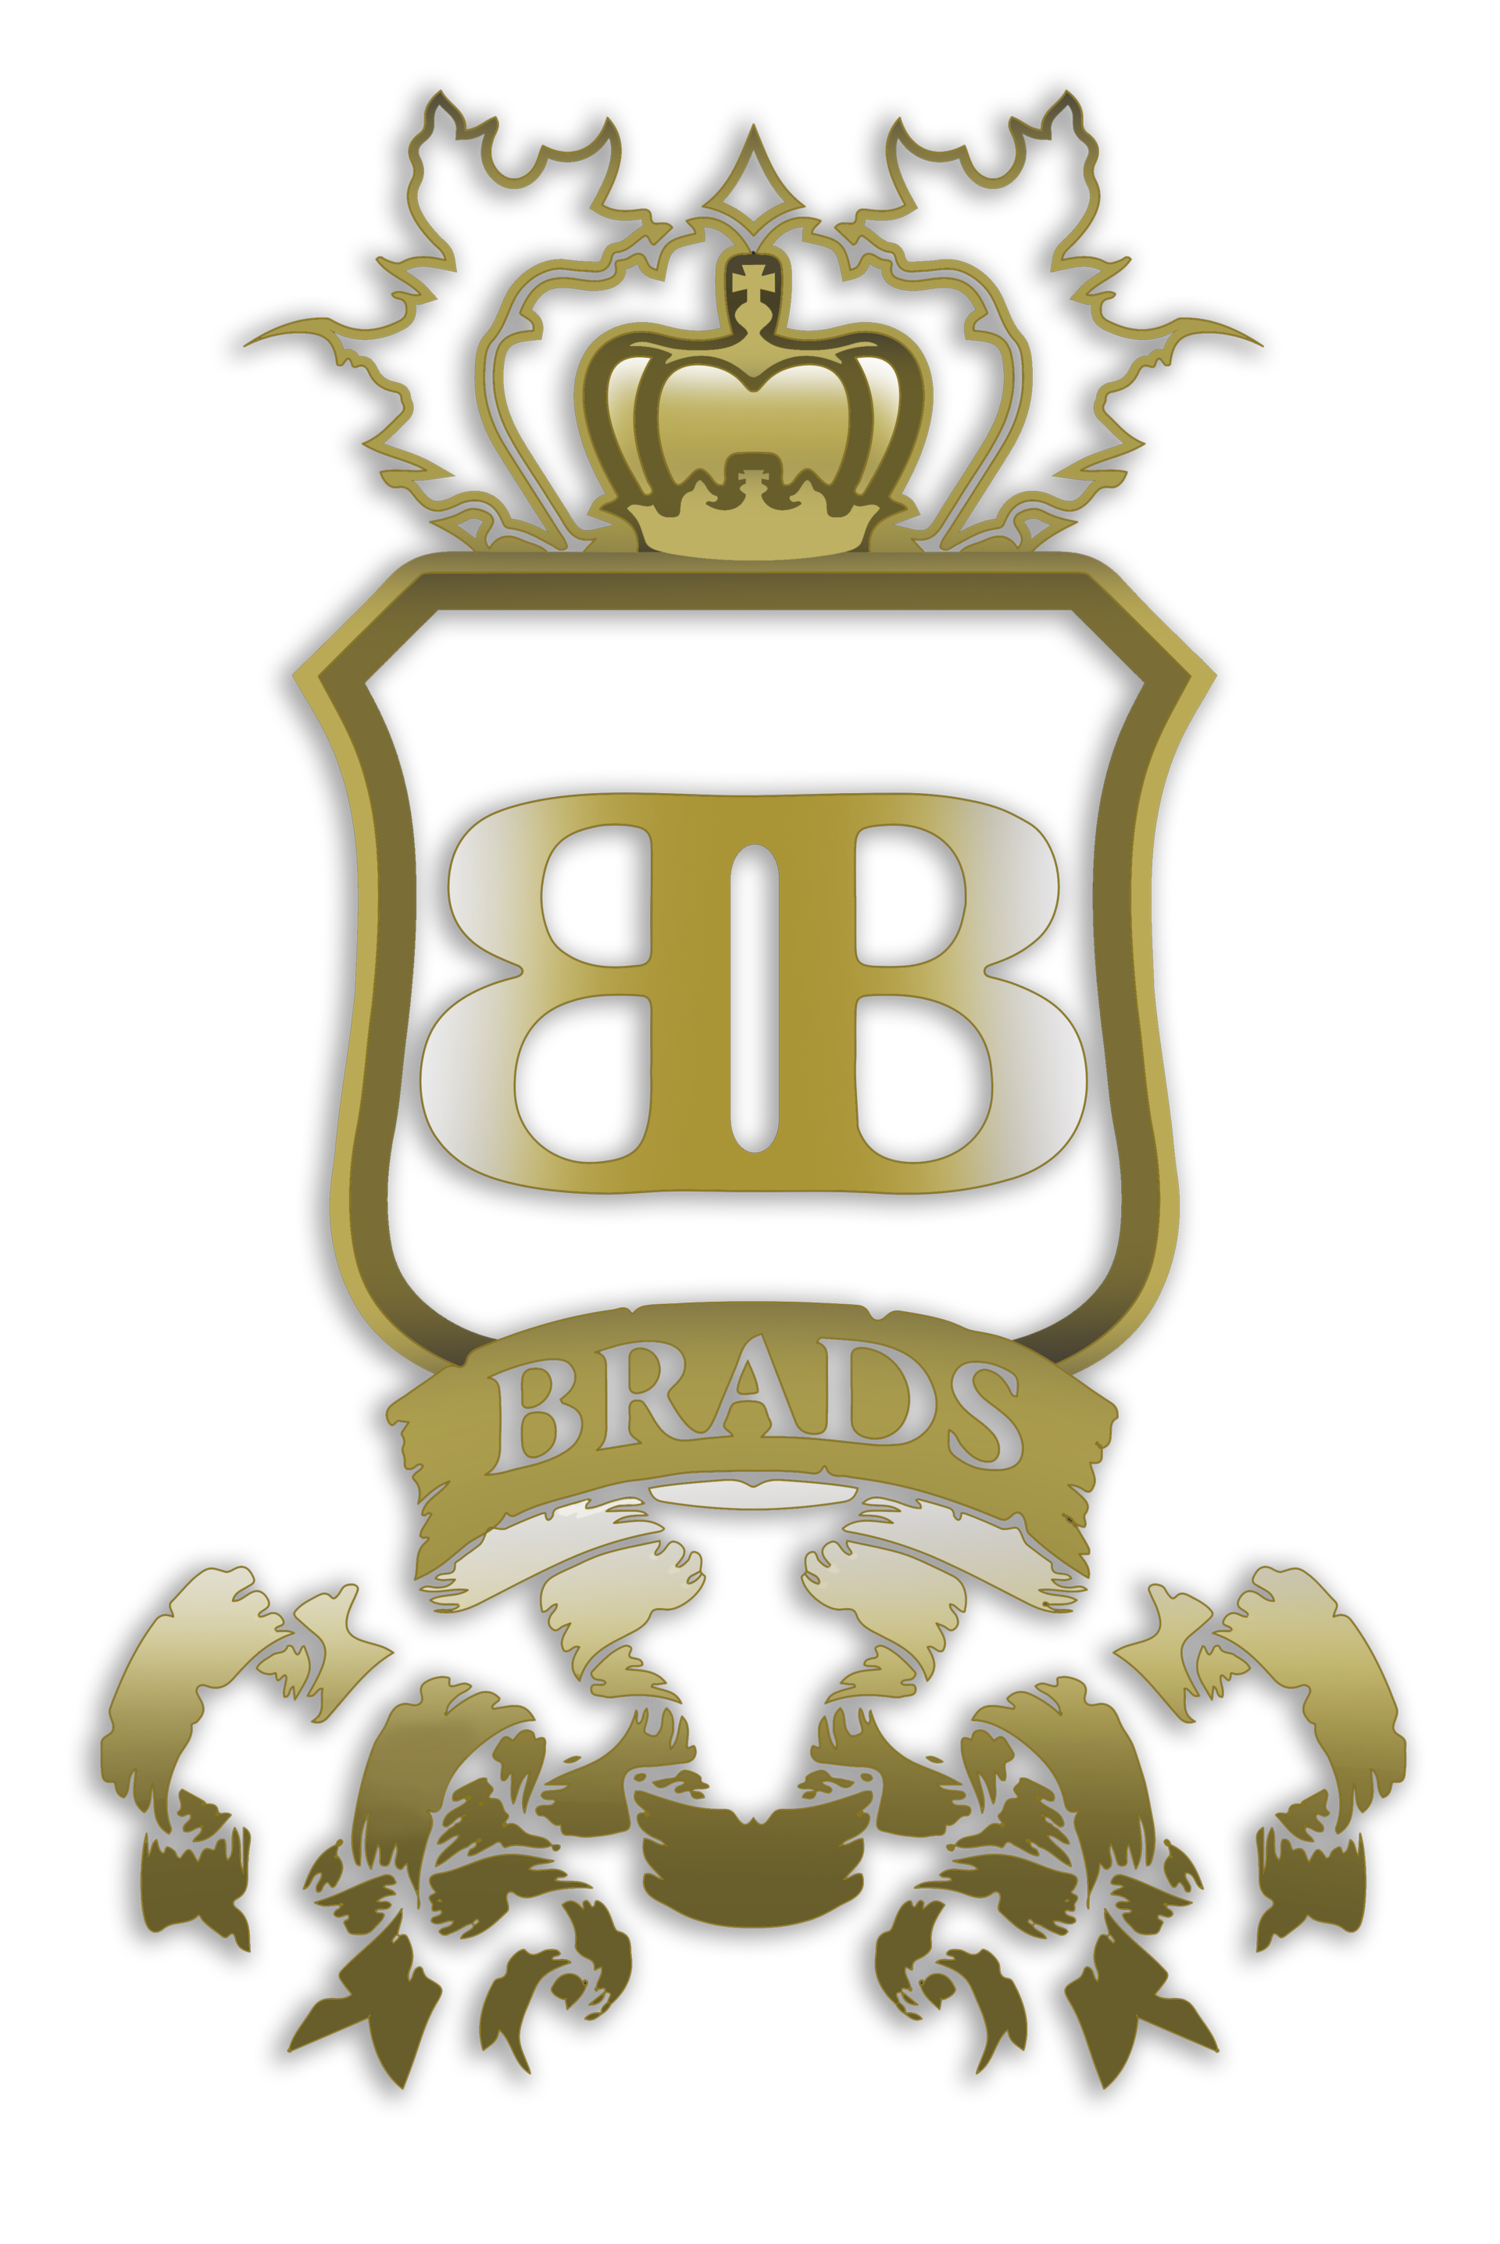 Brad's Barbers